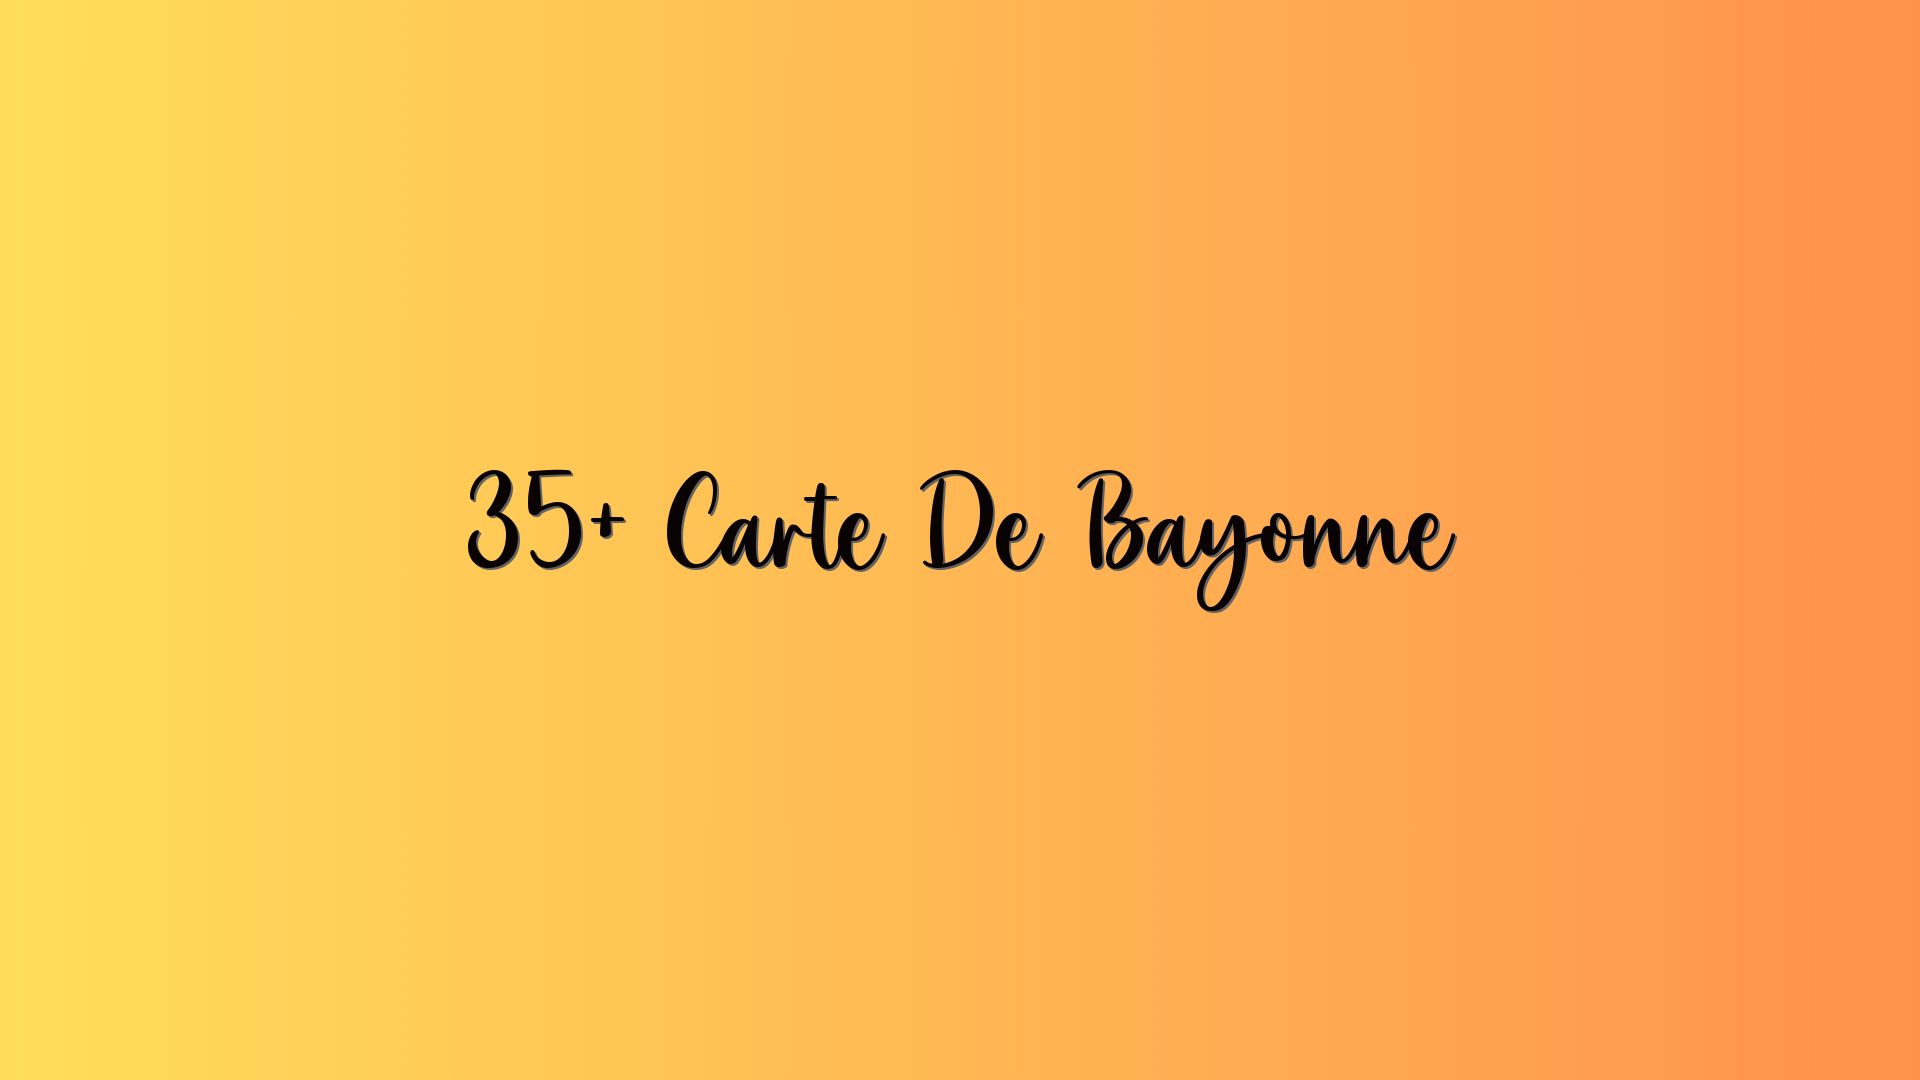 35+ Carte De Bayonne